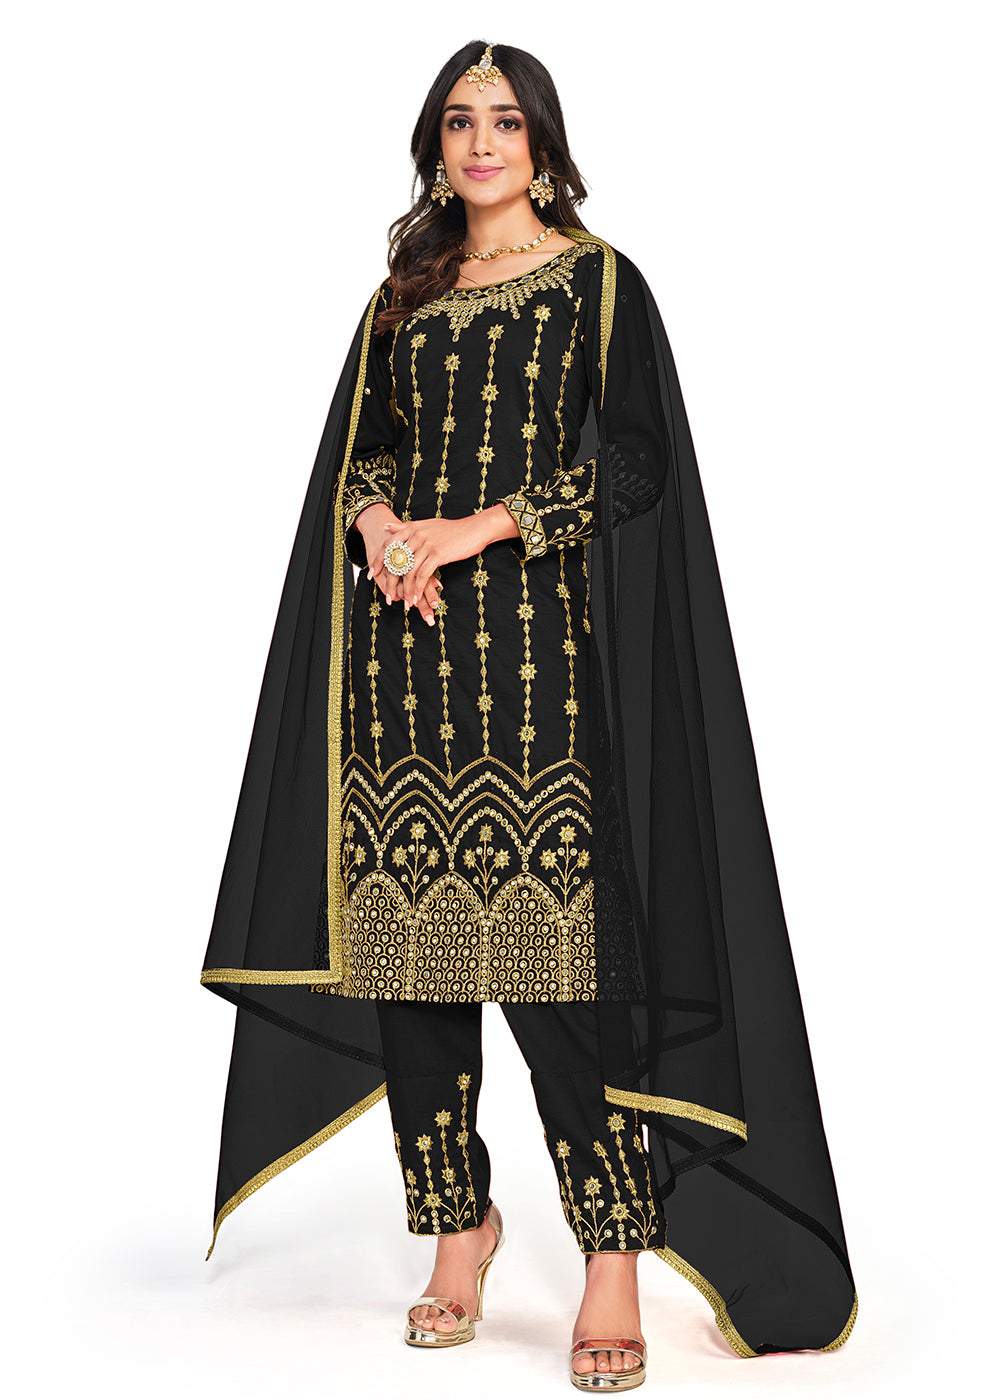 Buy Now Beautiful Mirror Work Black Silk Festive Salwar Suit Online in USA, UK, Canada & Worldwide at Empress Clothing.